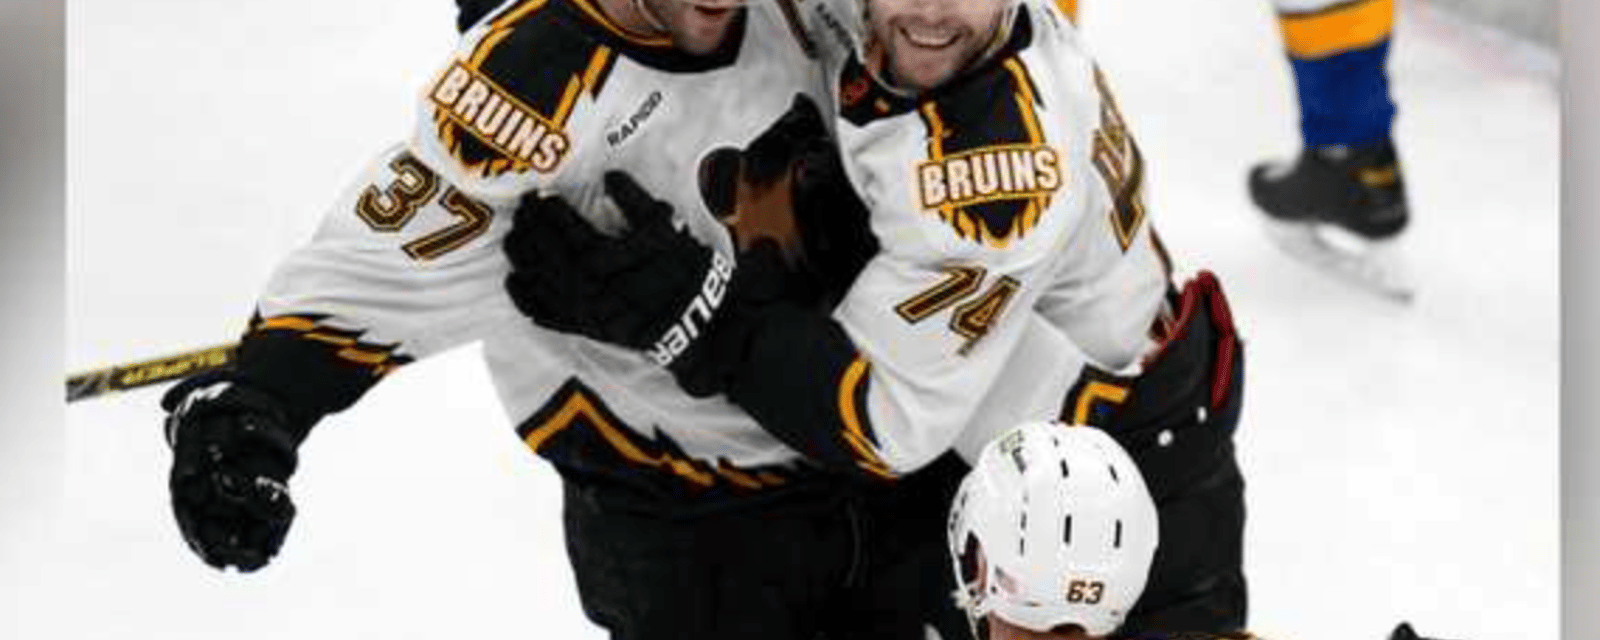 Bruins have tied historic NHL mark! 